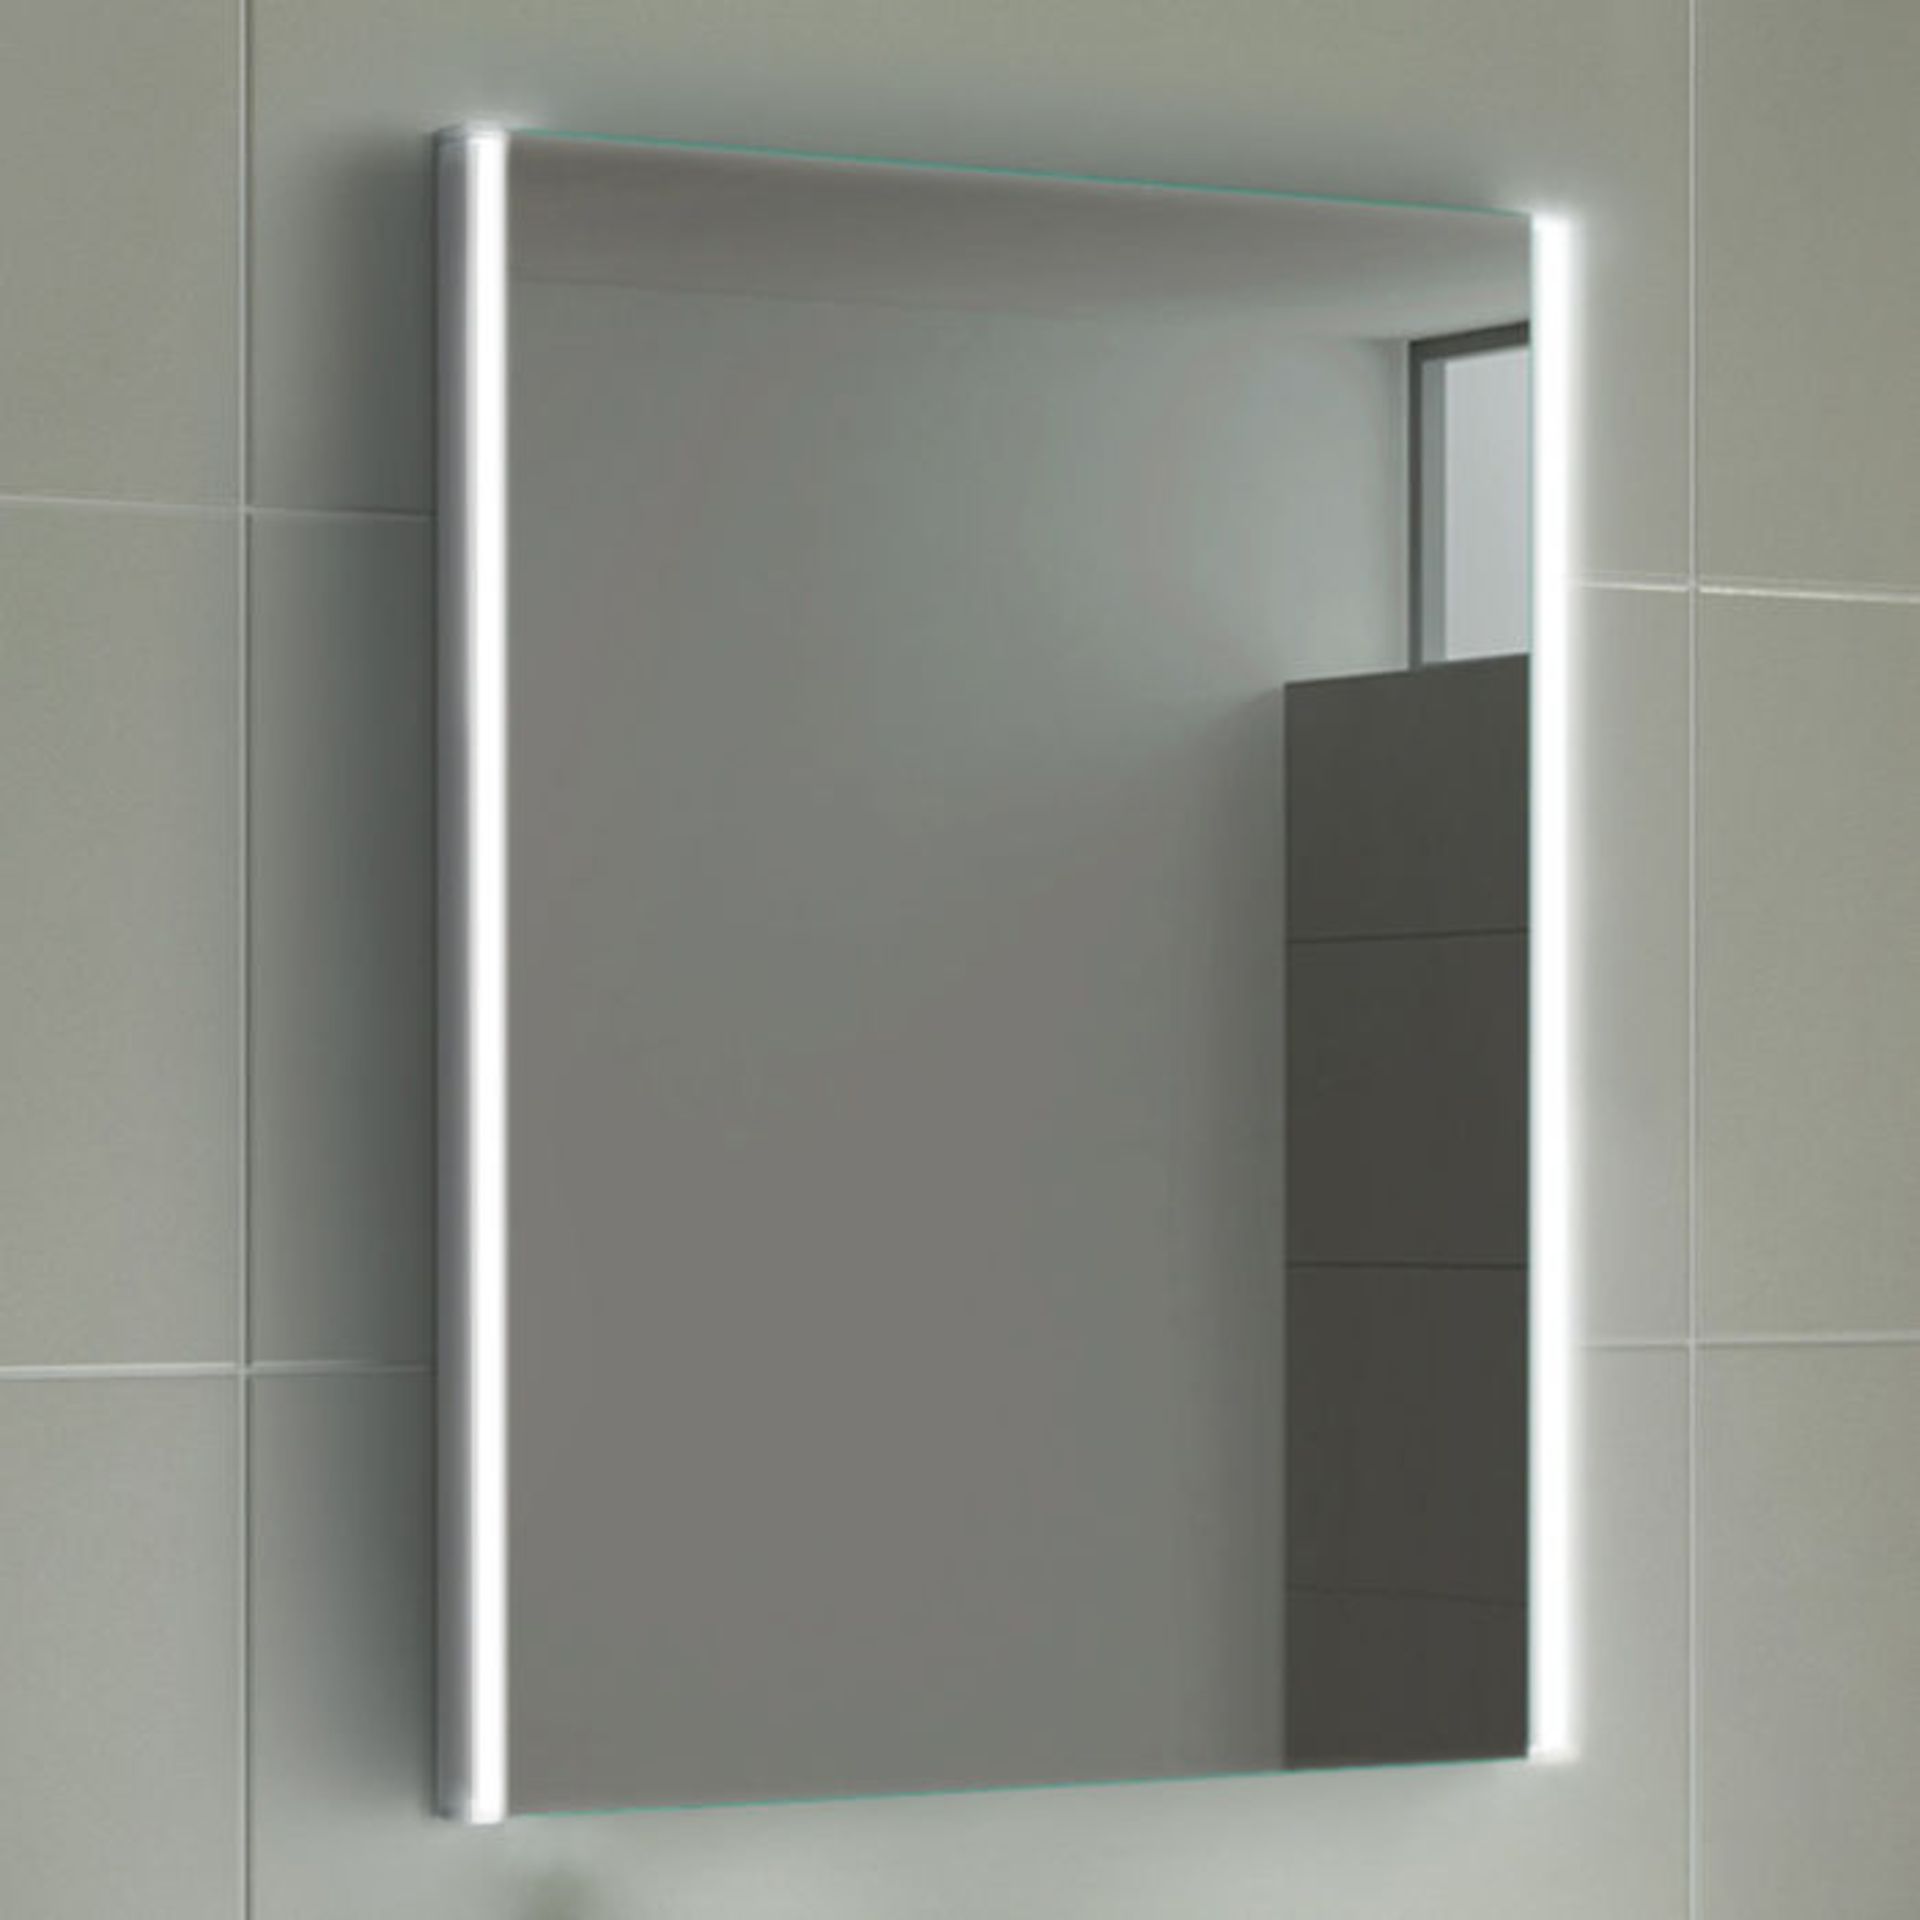 (RK32) 450x600mm Denver Illuminated LED Mirror. RRP £349.99. Energy efficient LED lighting wit... - Image 2 of 6